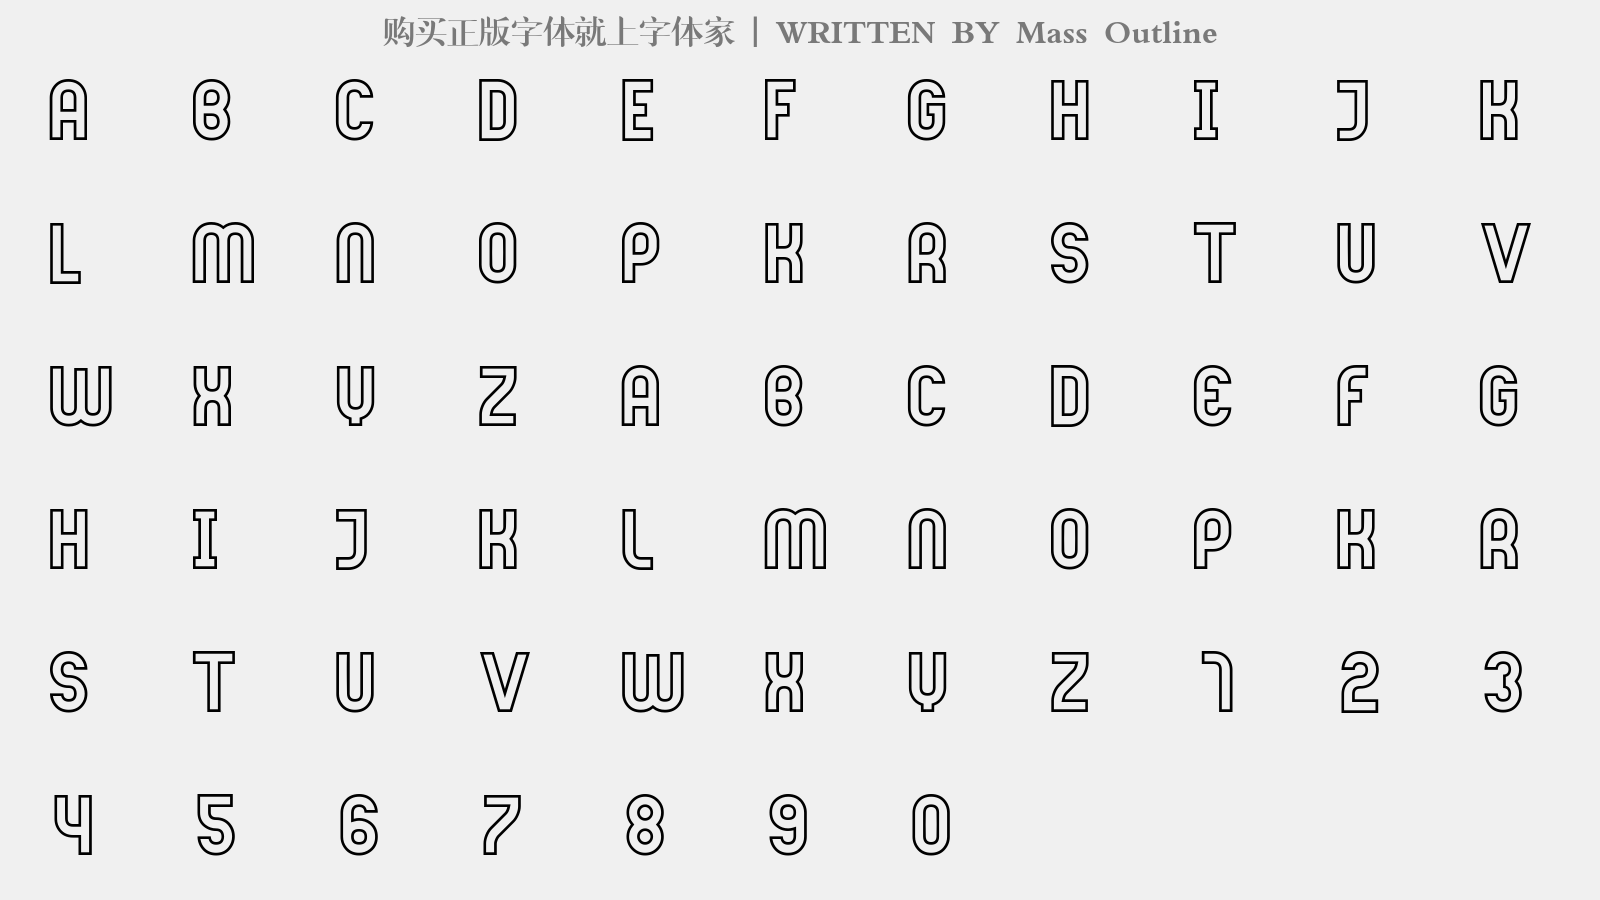 Mass Outline - 大写字母/小写字母/数字